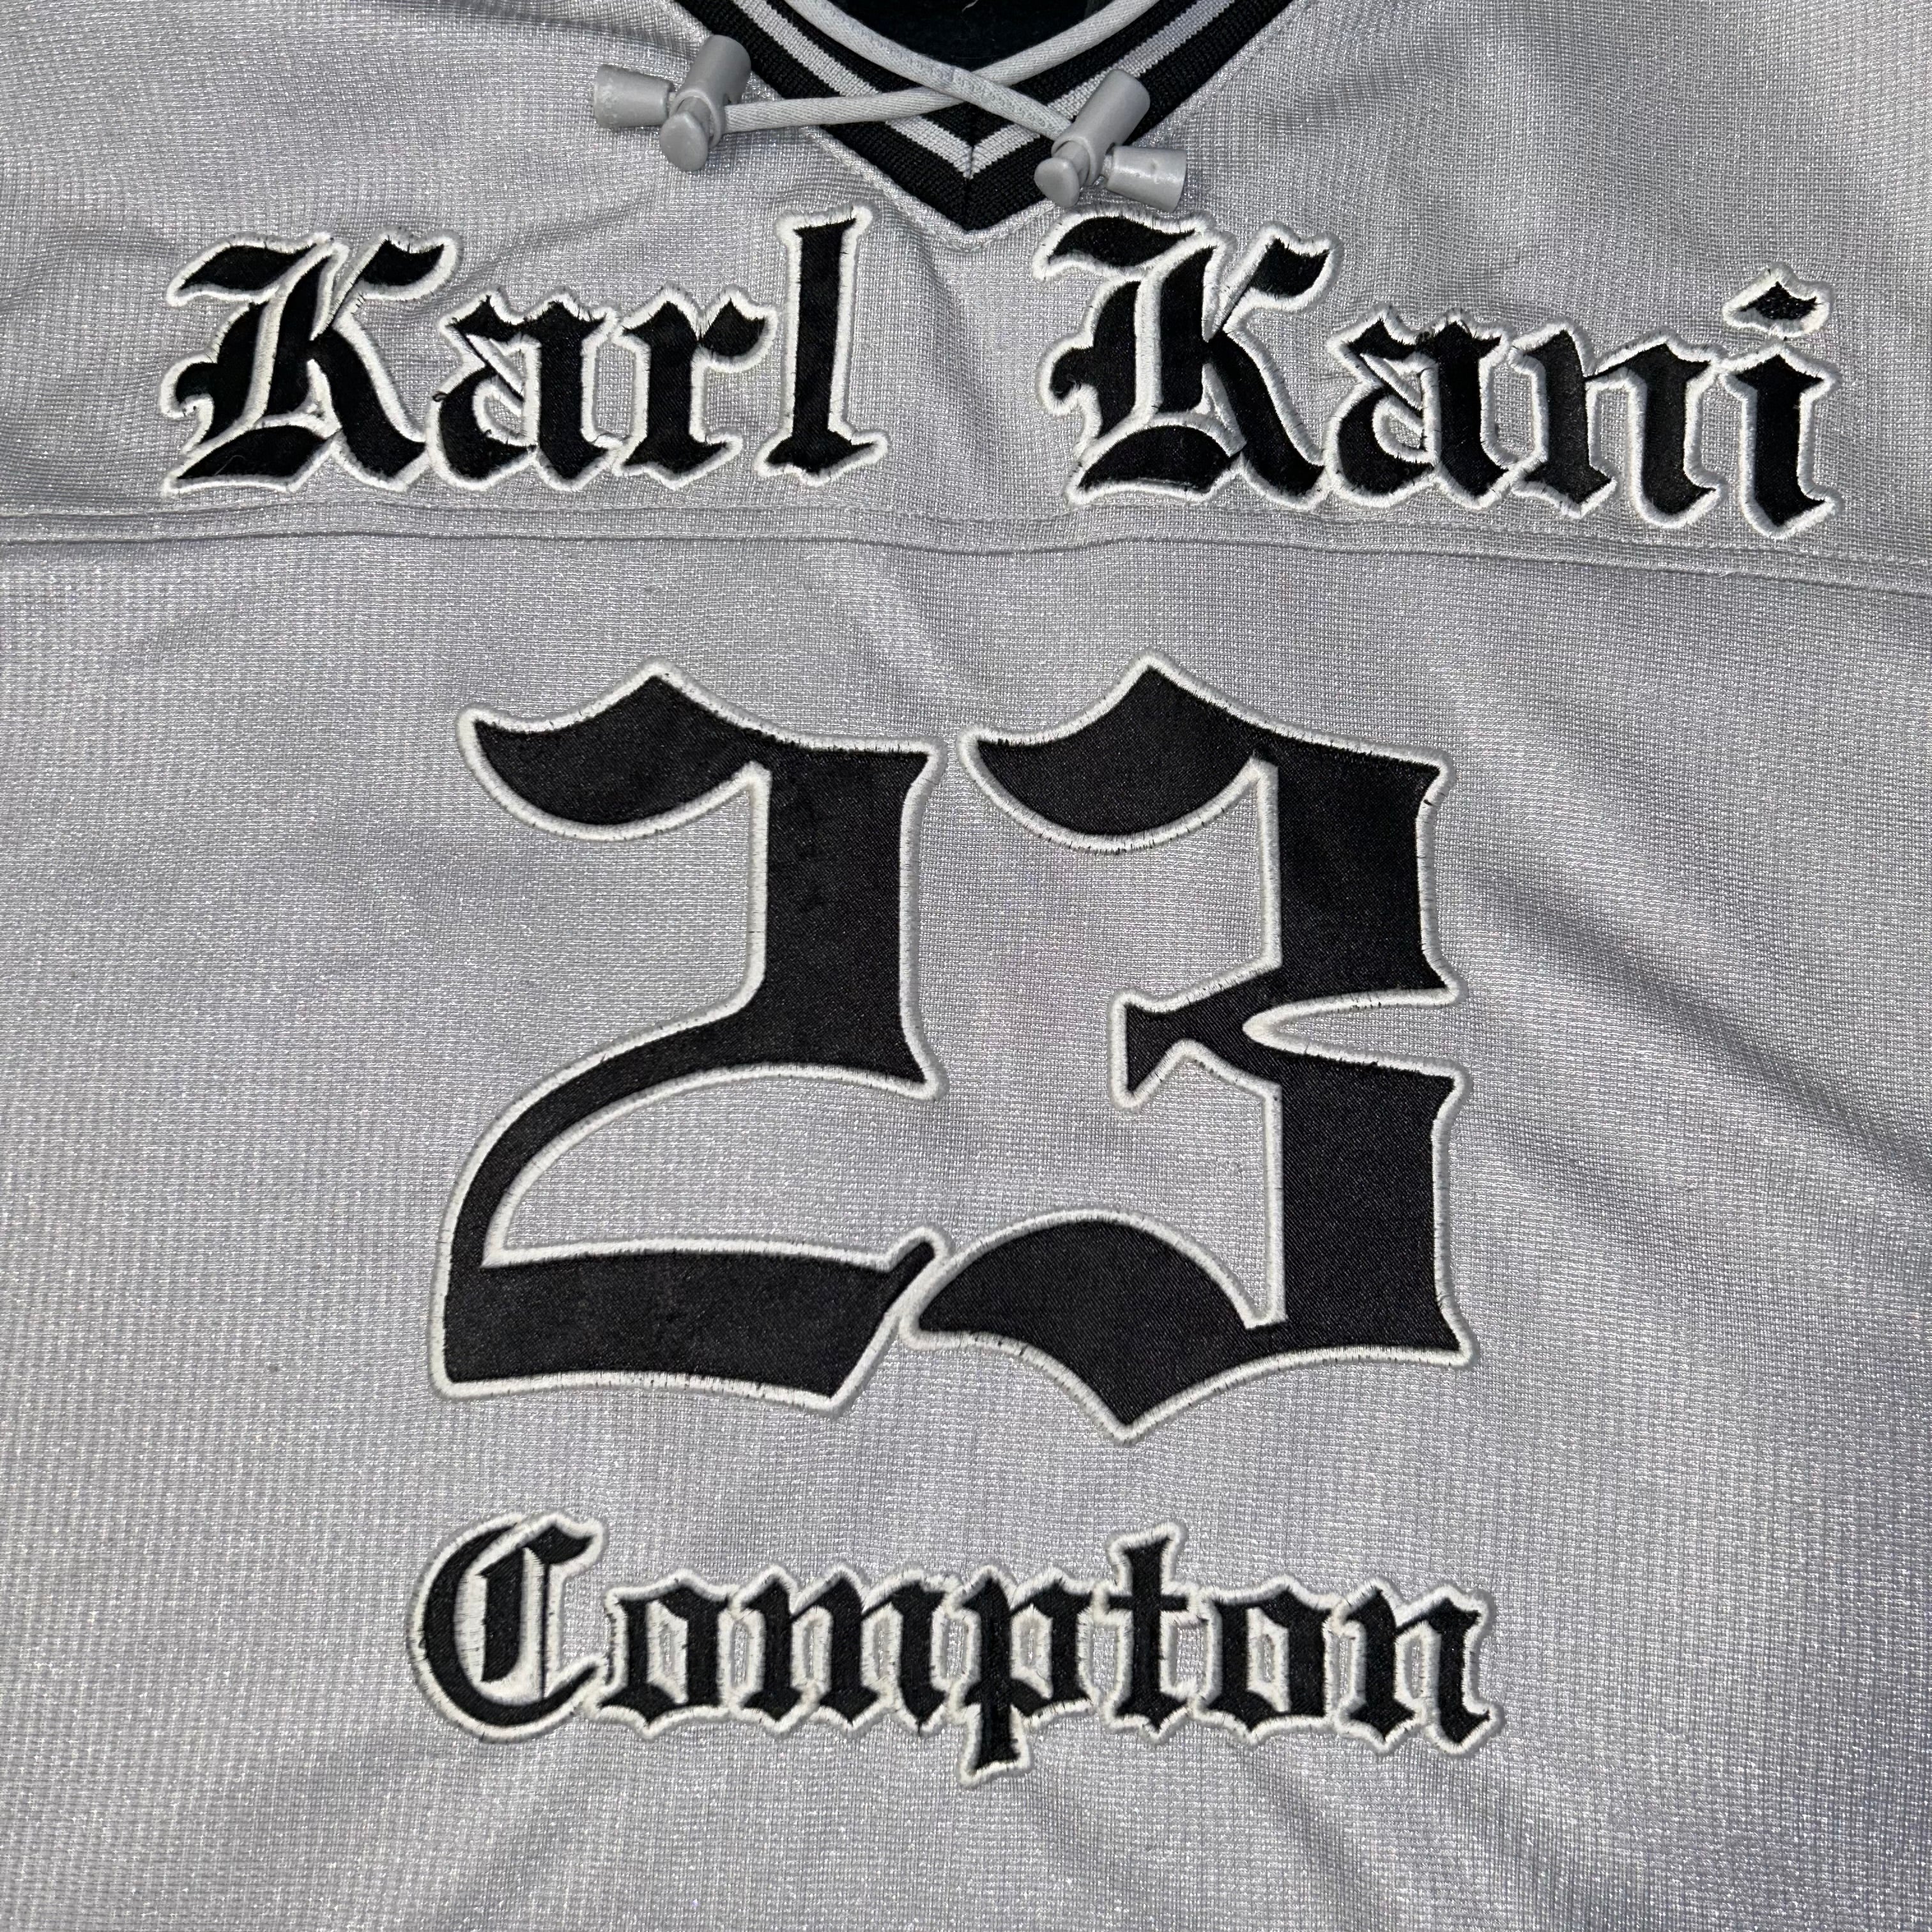 Karl Kani Compton Vintage Sweatshirt (XL/XXL)